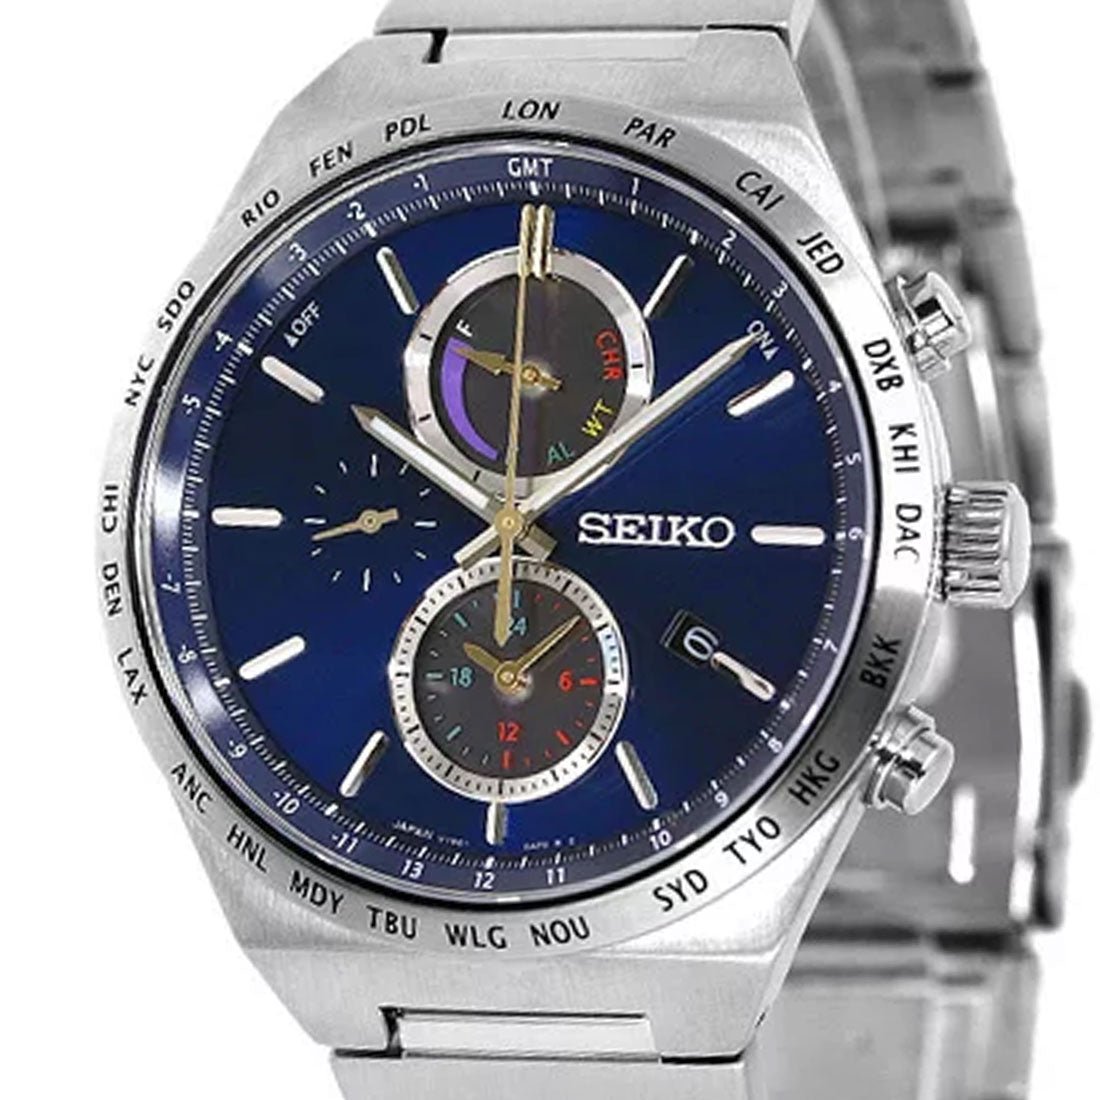 Seiko 2020 Selection Summer Limited Edition JDM Watch SBPJ041 -Seiko